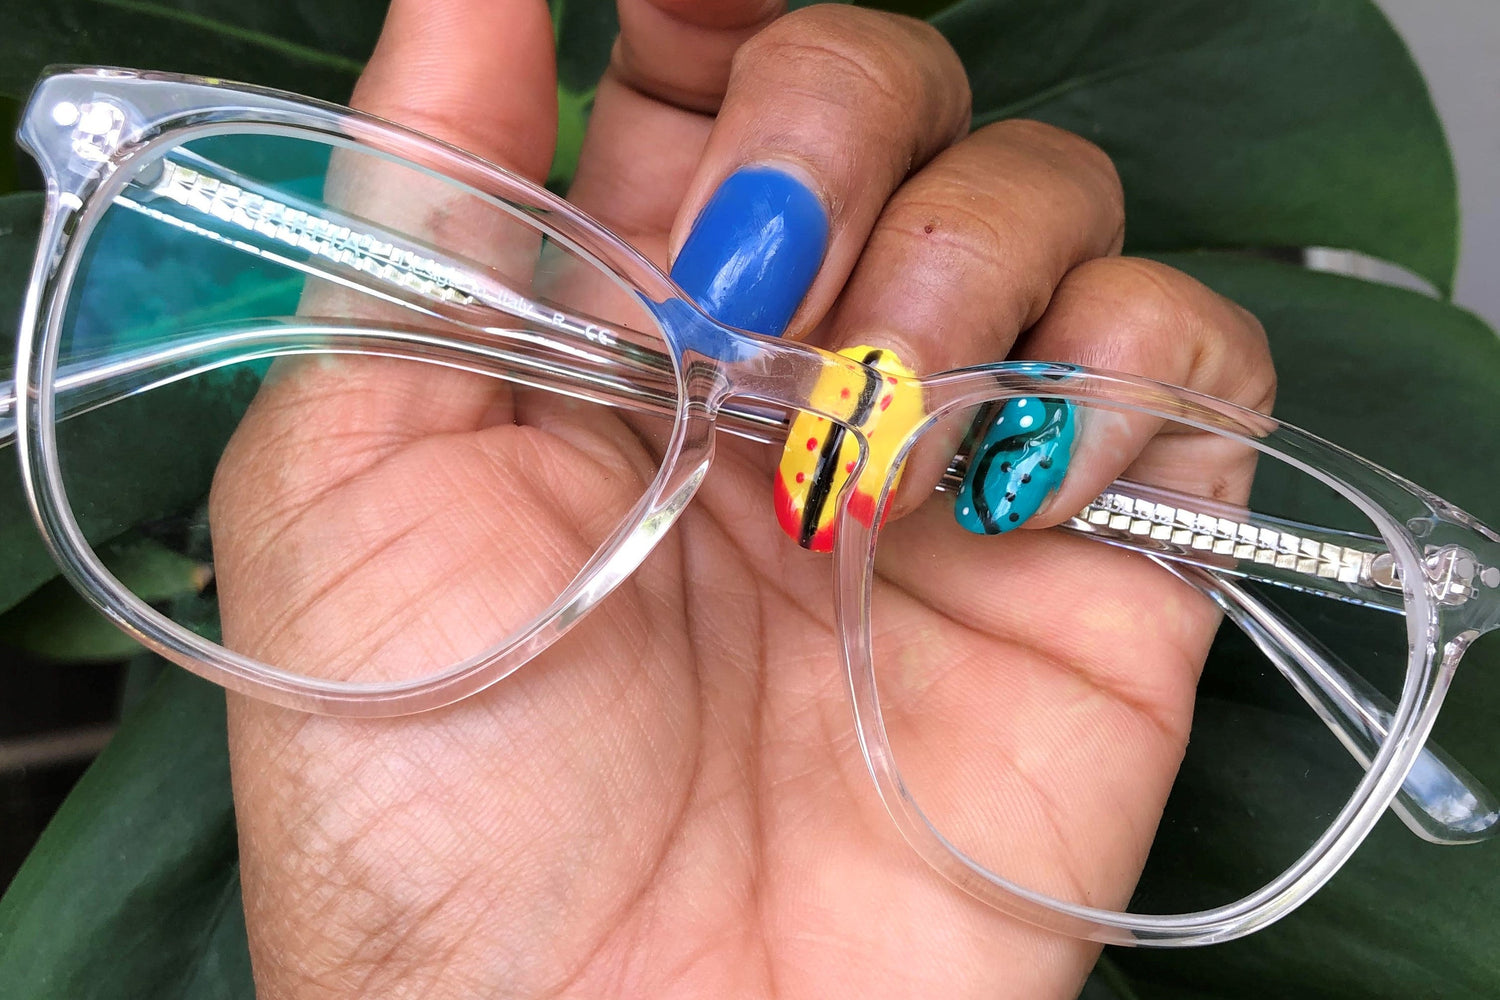 Can You Wear Reading Glasses All Day? | KOALAEYE OPTICAL